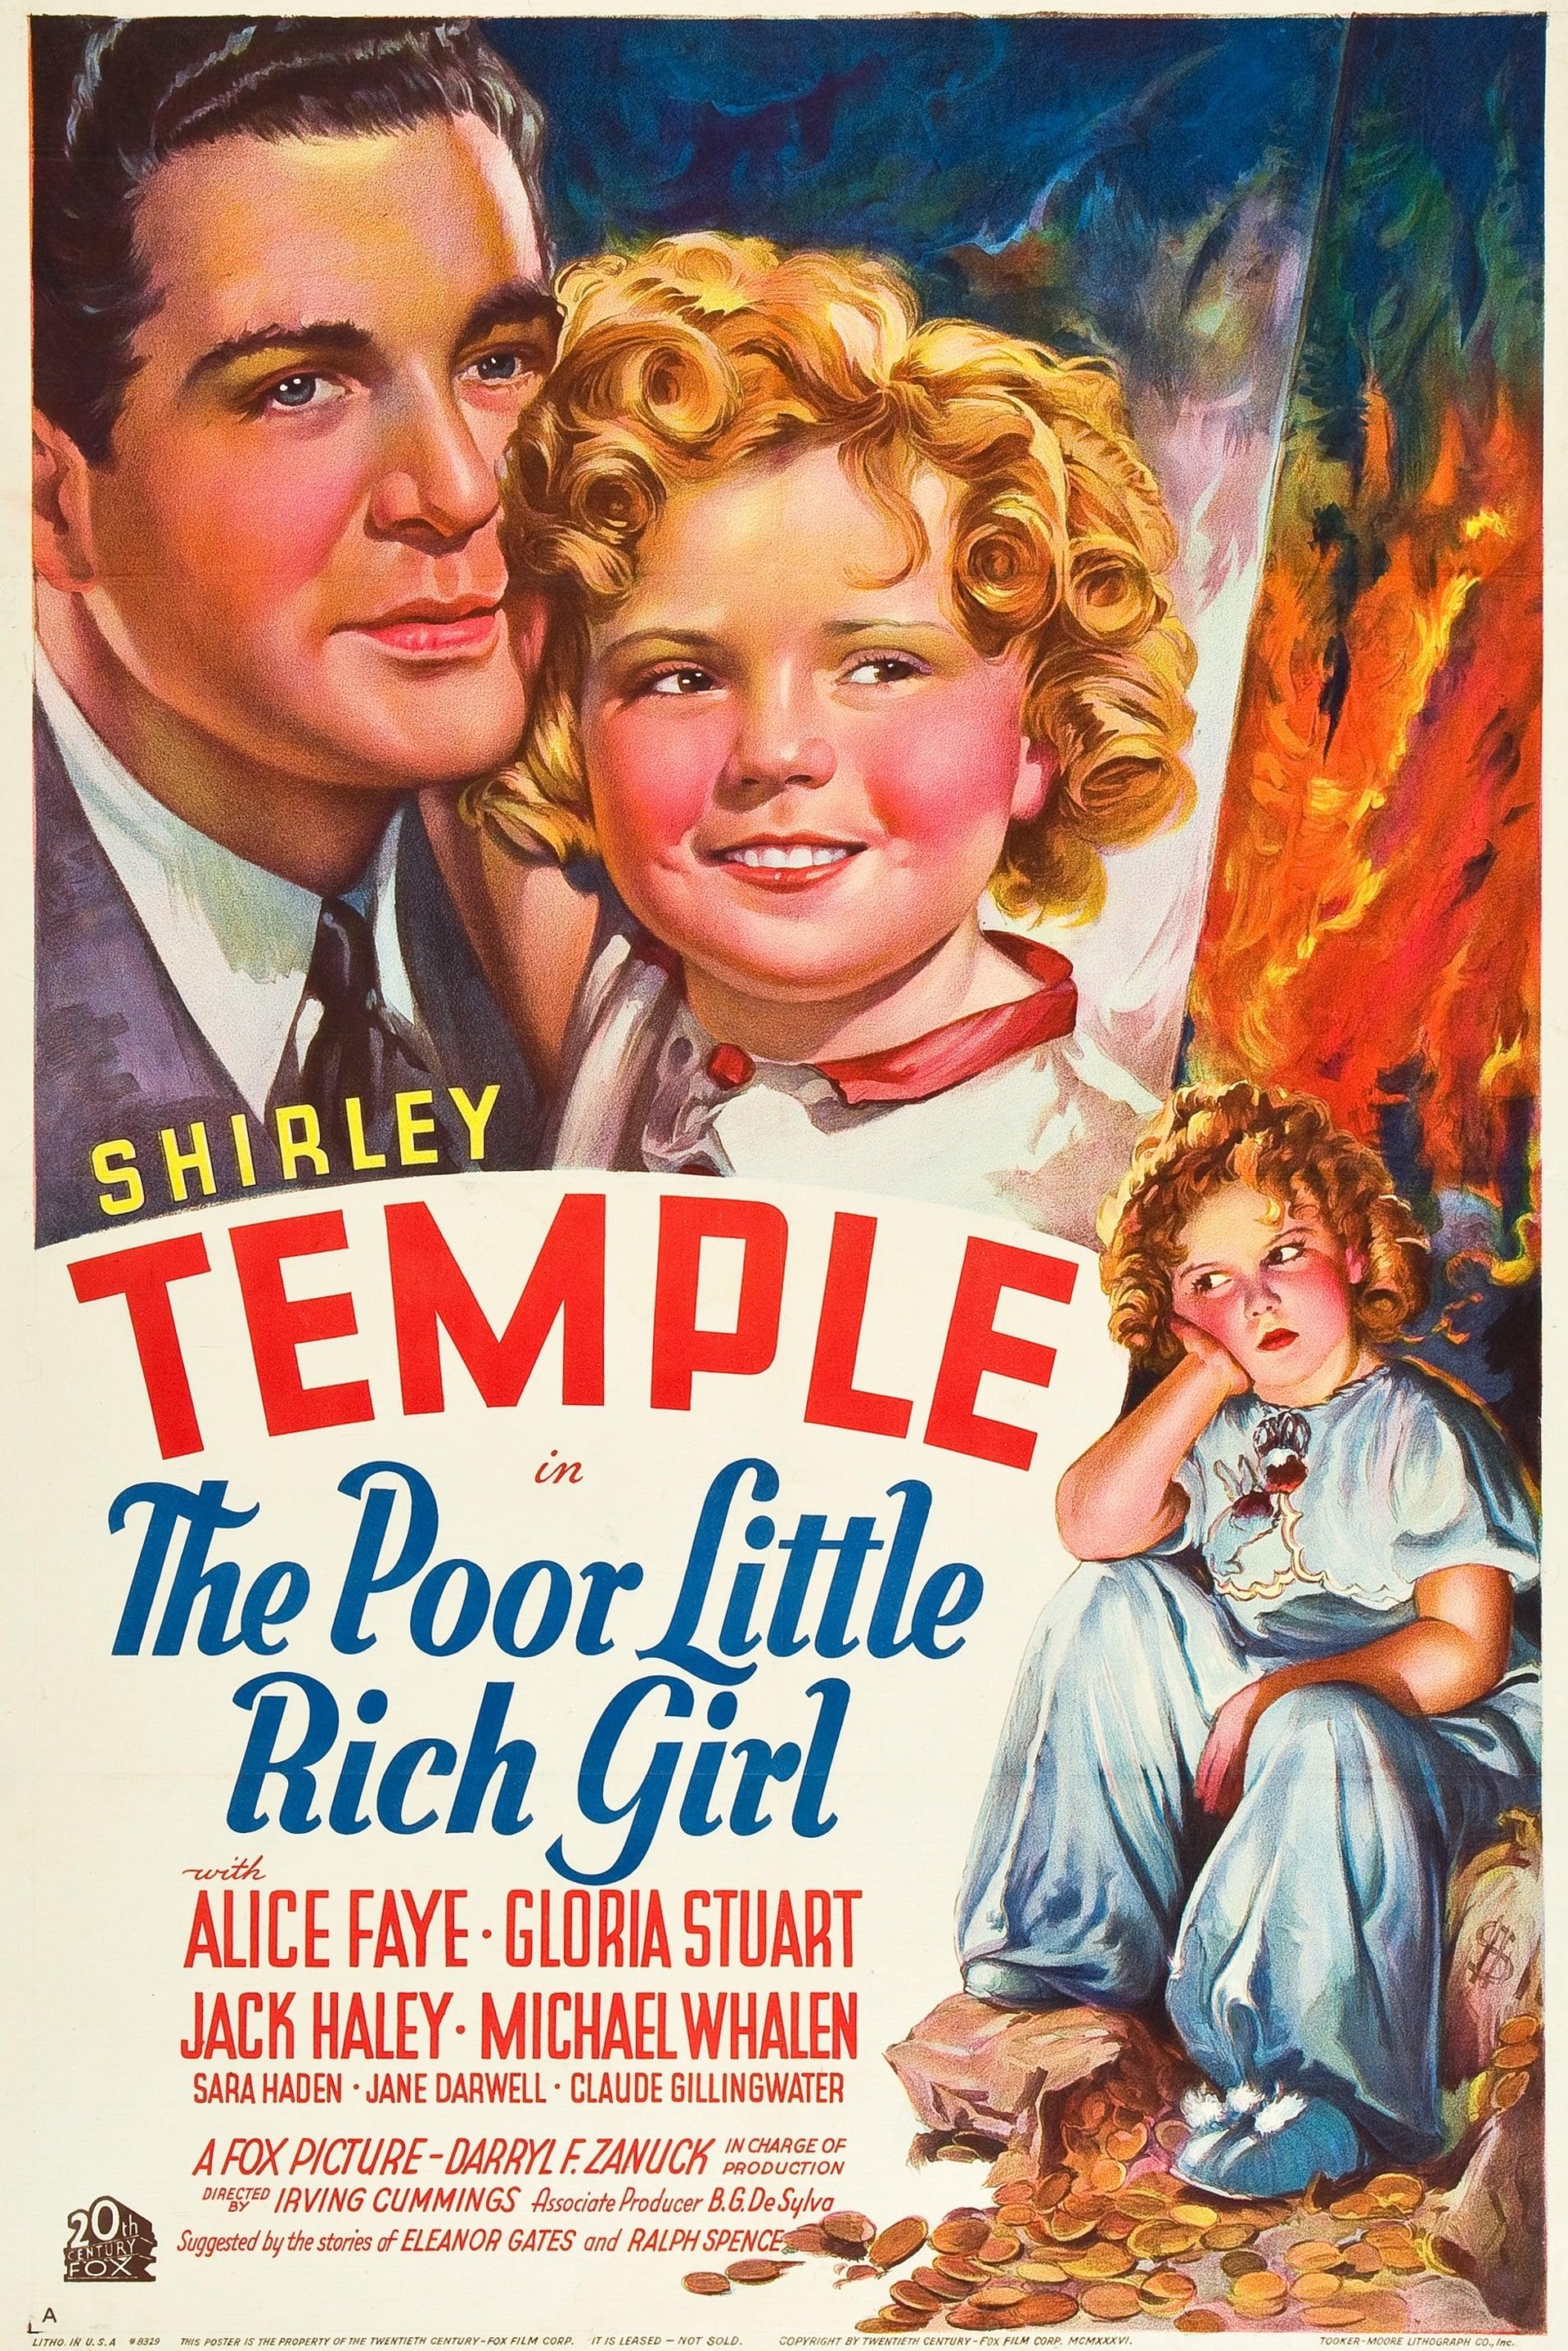 Poor Little Rich Girl poster